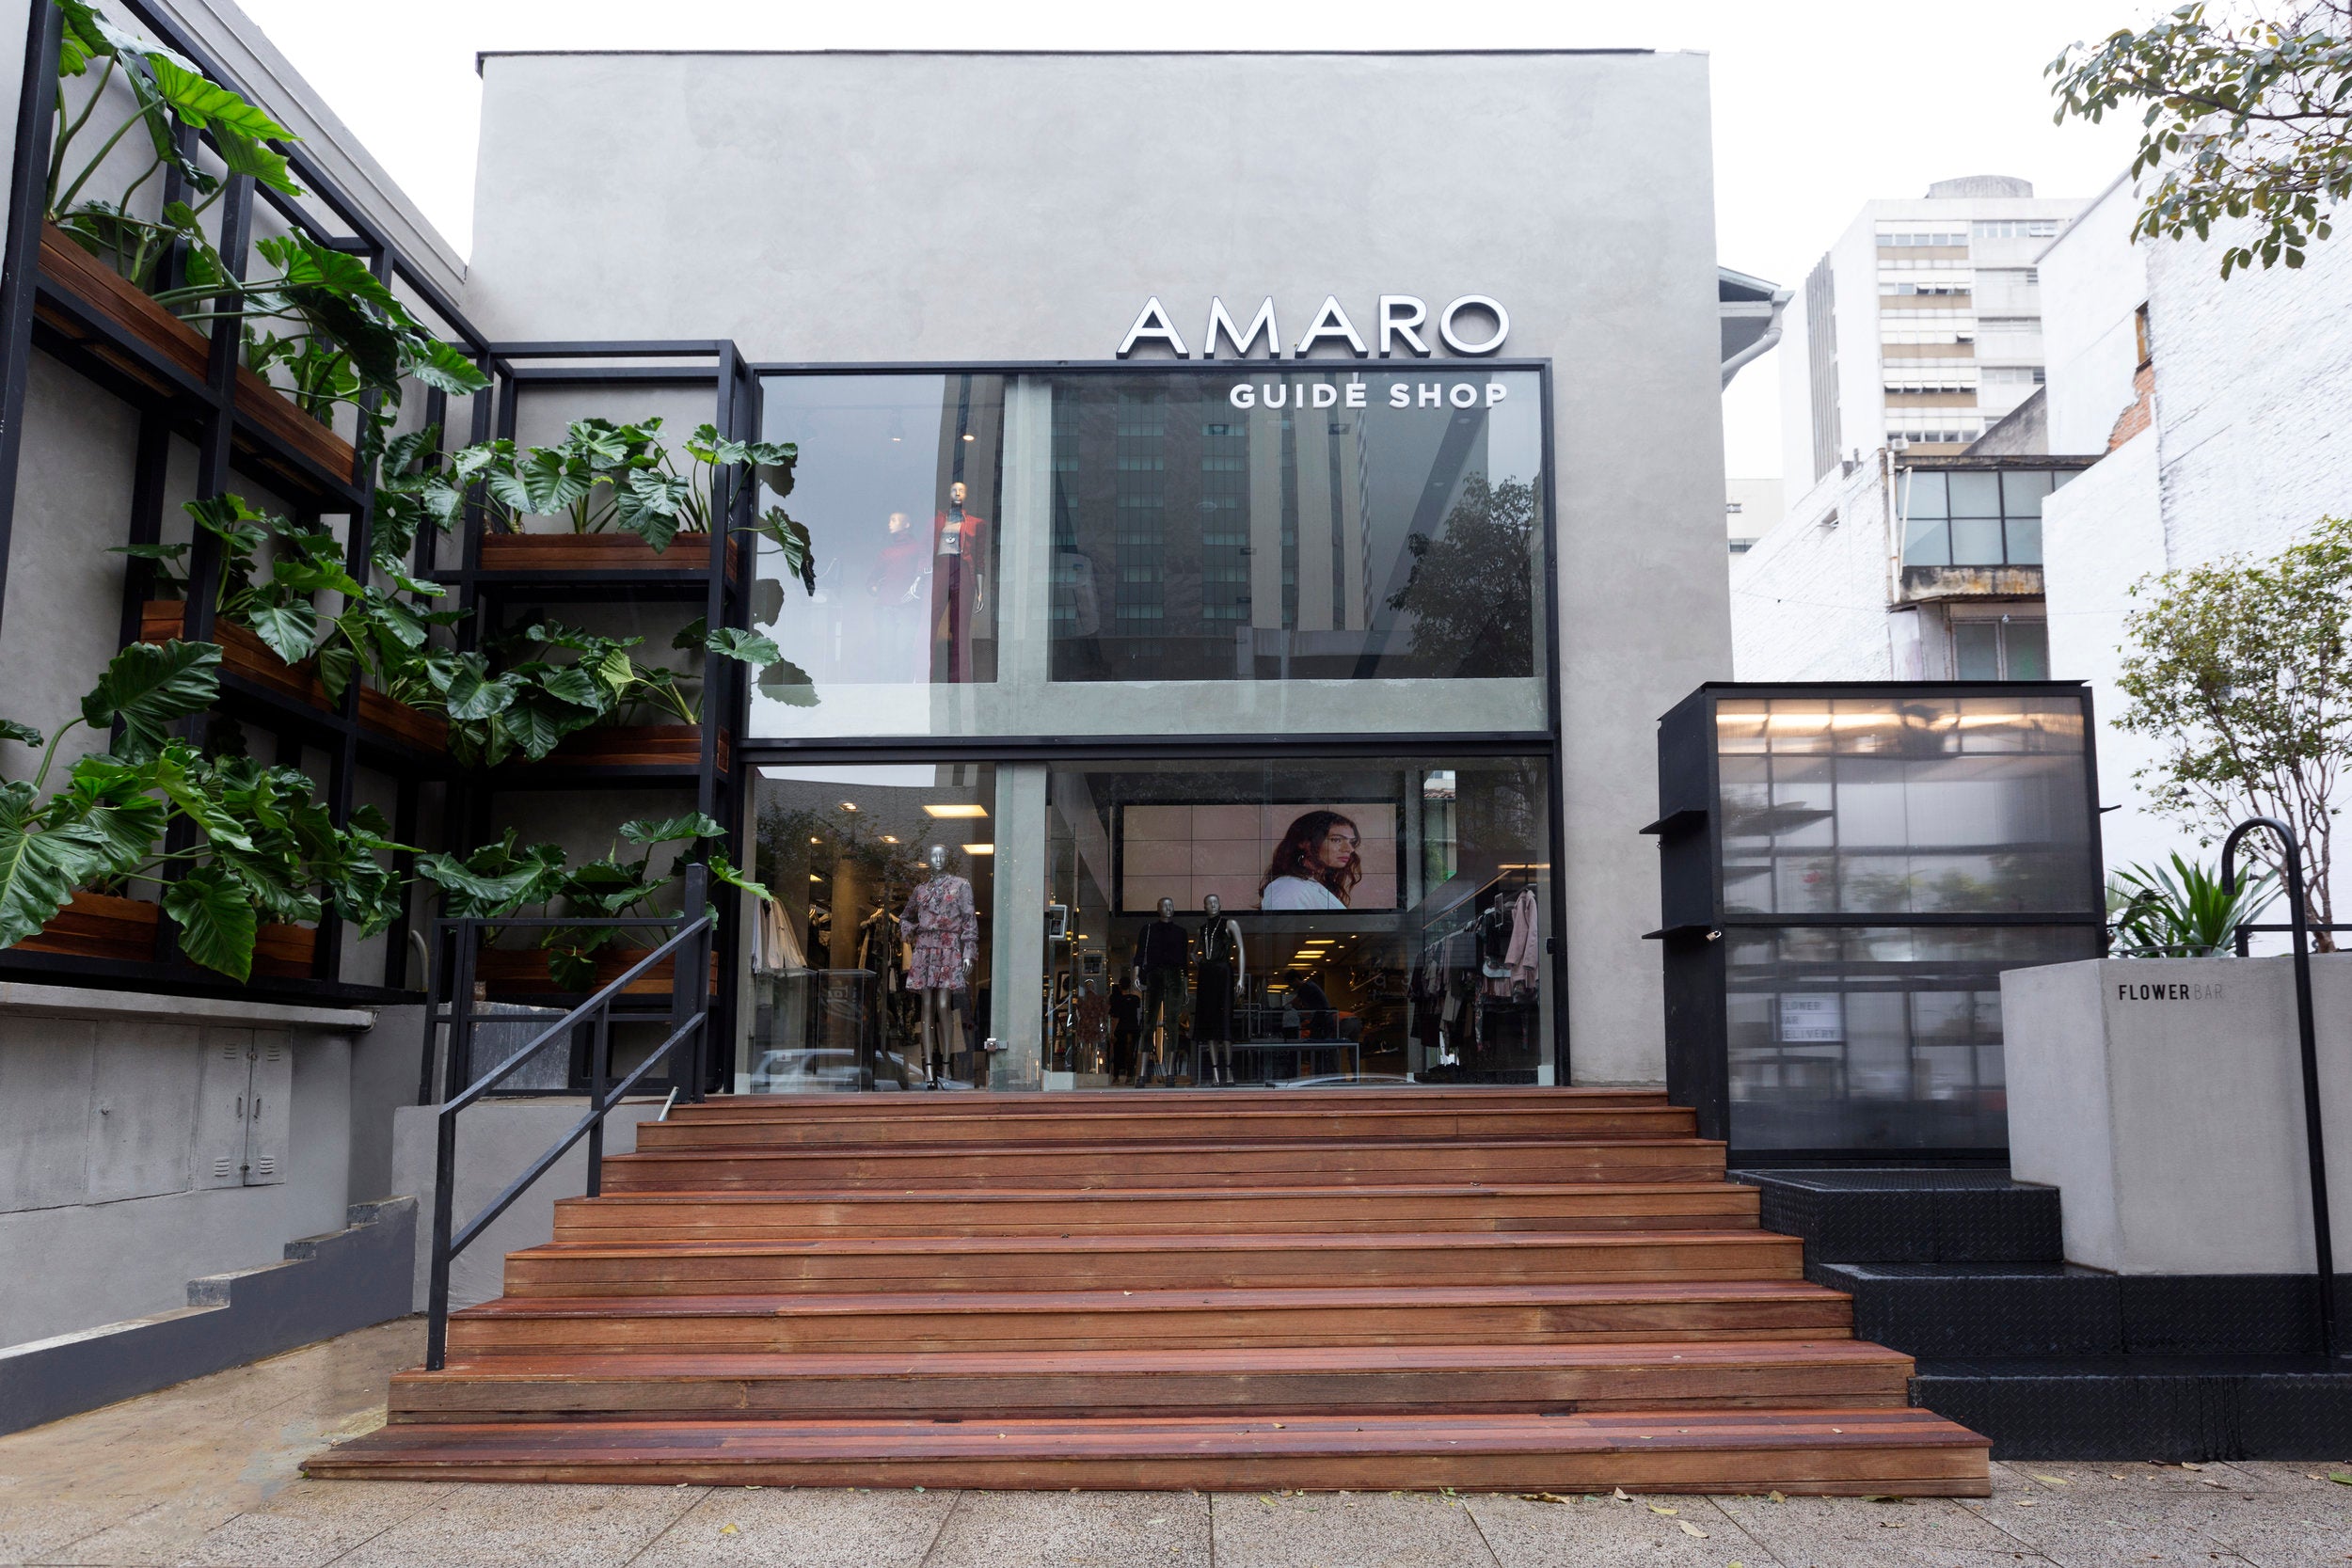 AMARO inaugura novo Guide Shop na Oscar Freire